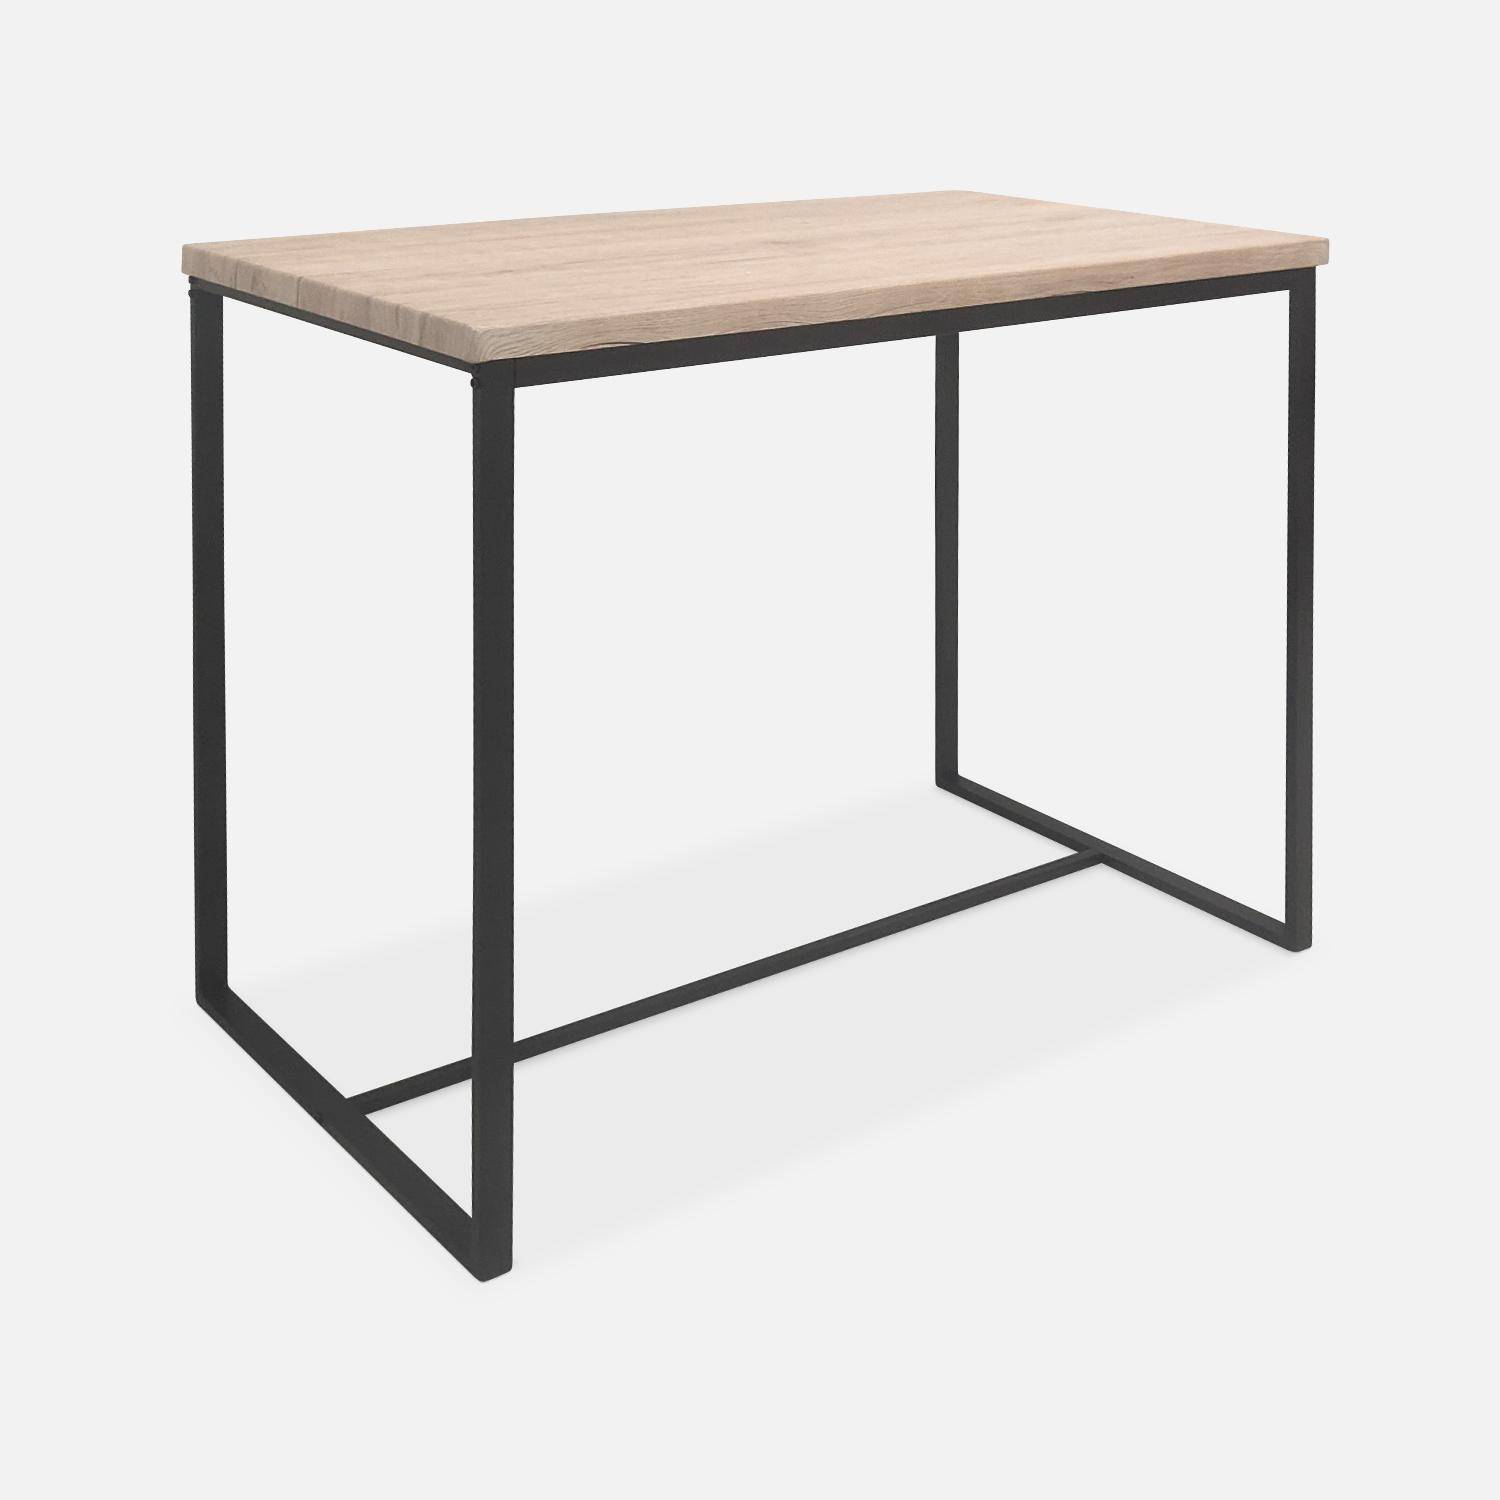 Industrial bar style table set with 4 stools, dining set 100x60x90cm - Loft - Black,sweeek,Photo4